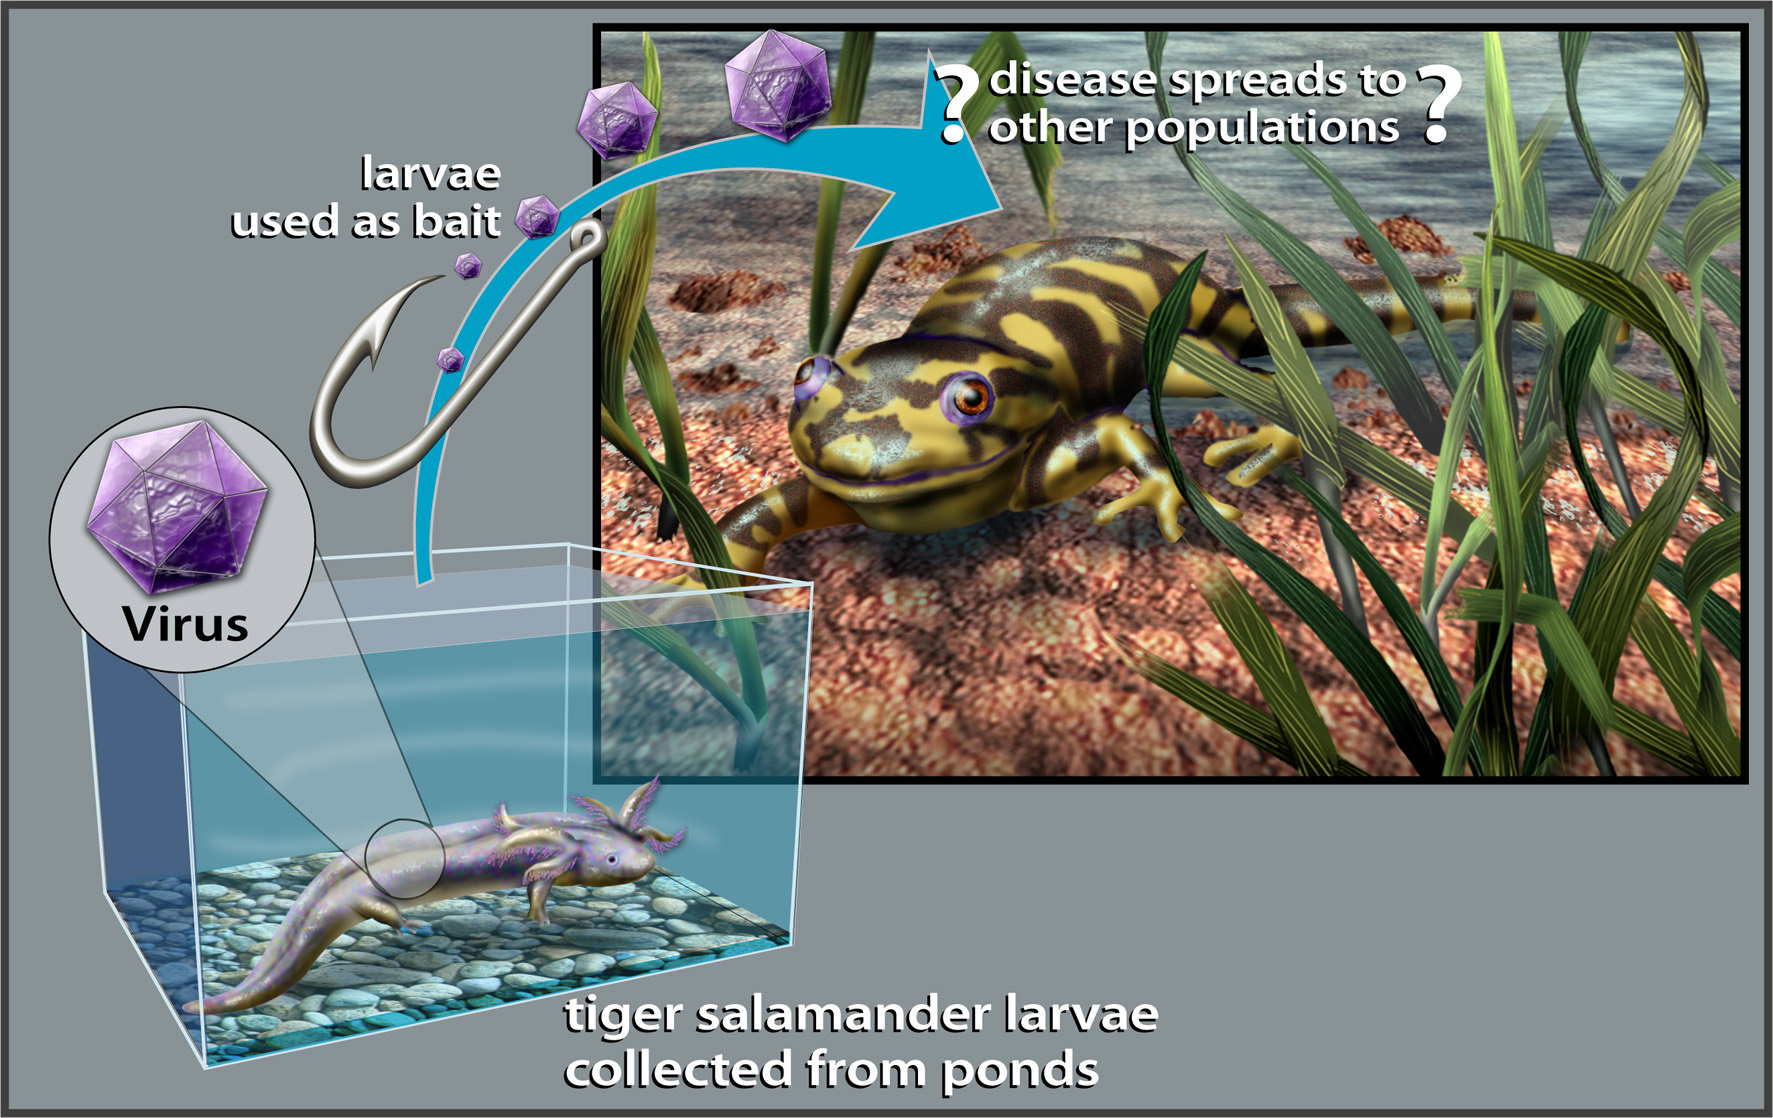 Multimedia Gallery - Spread of Amphibian Diseases (Image 1)